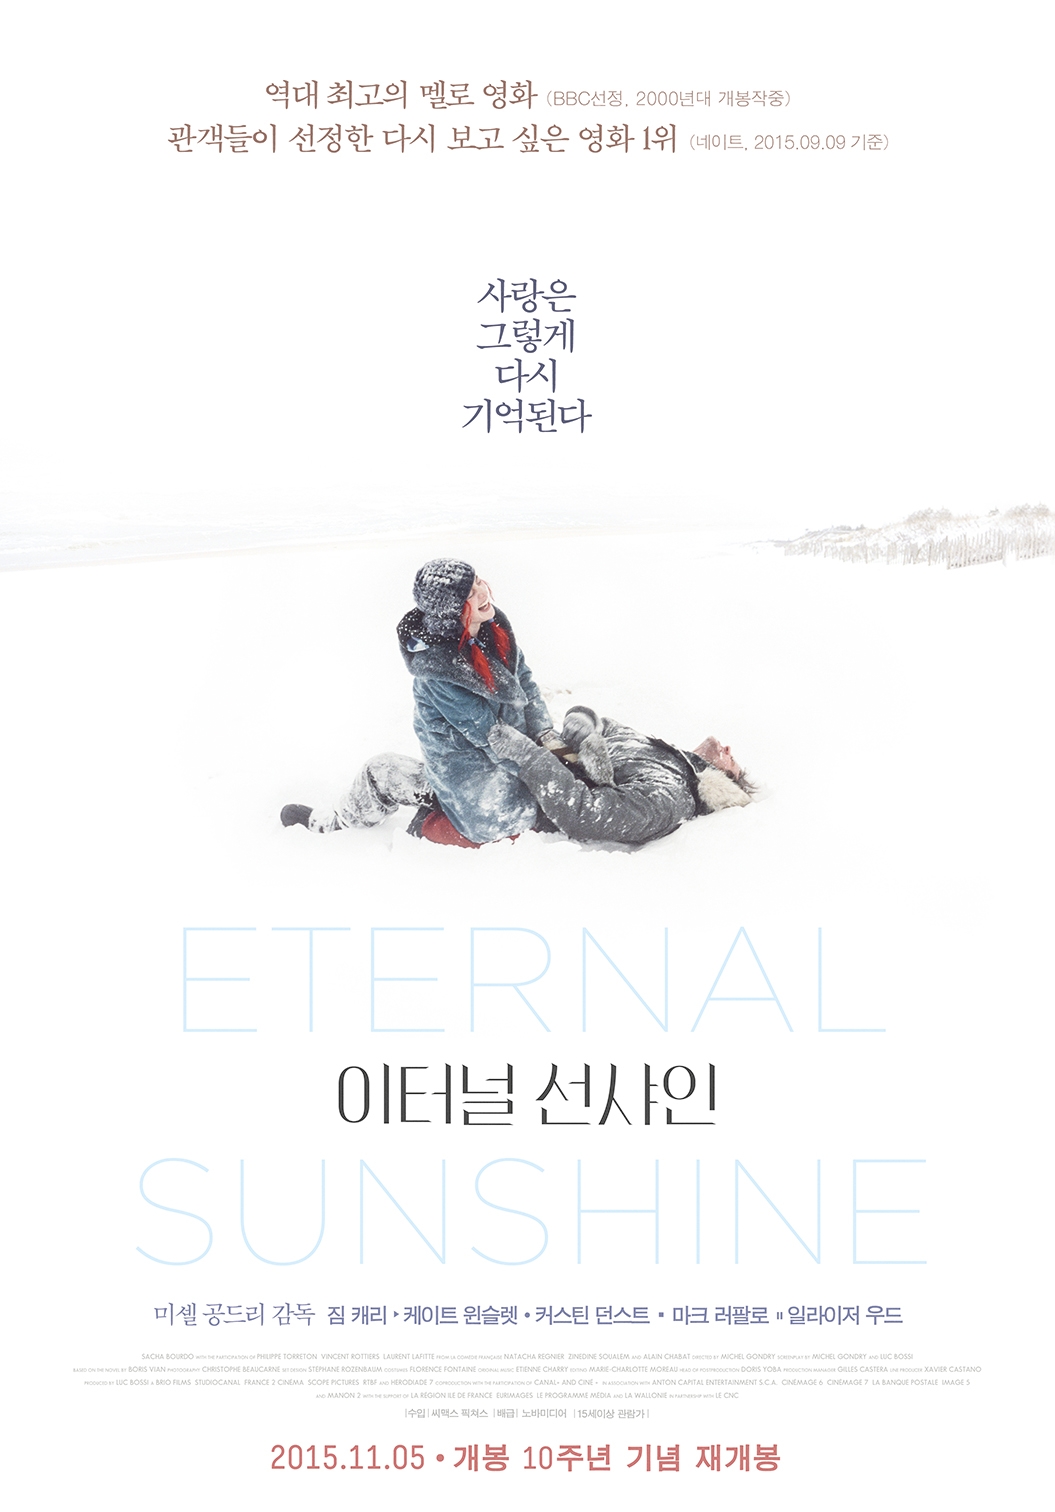 Eternal Sunshine